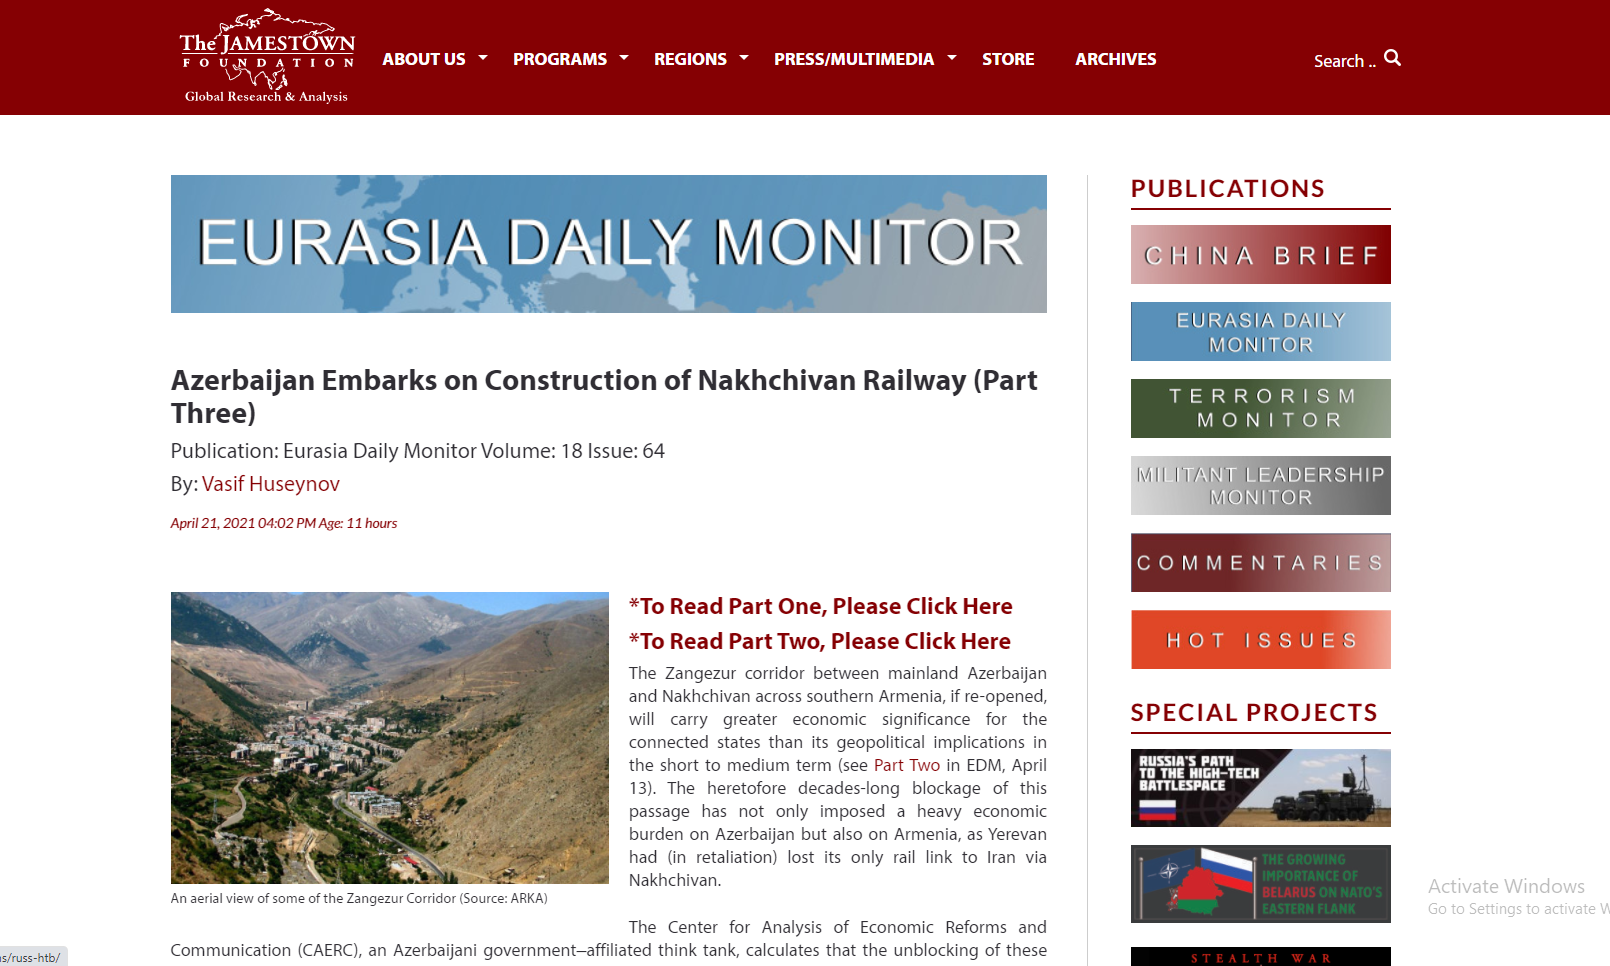 Azerbaijan Embarks on Construction of Nakhchivan Railway (Part Three)